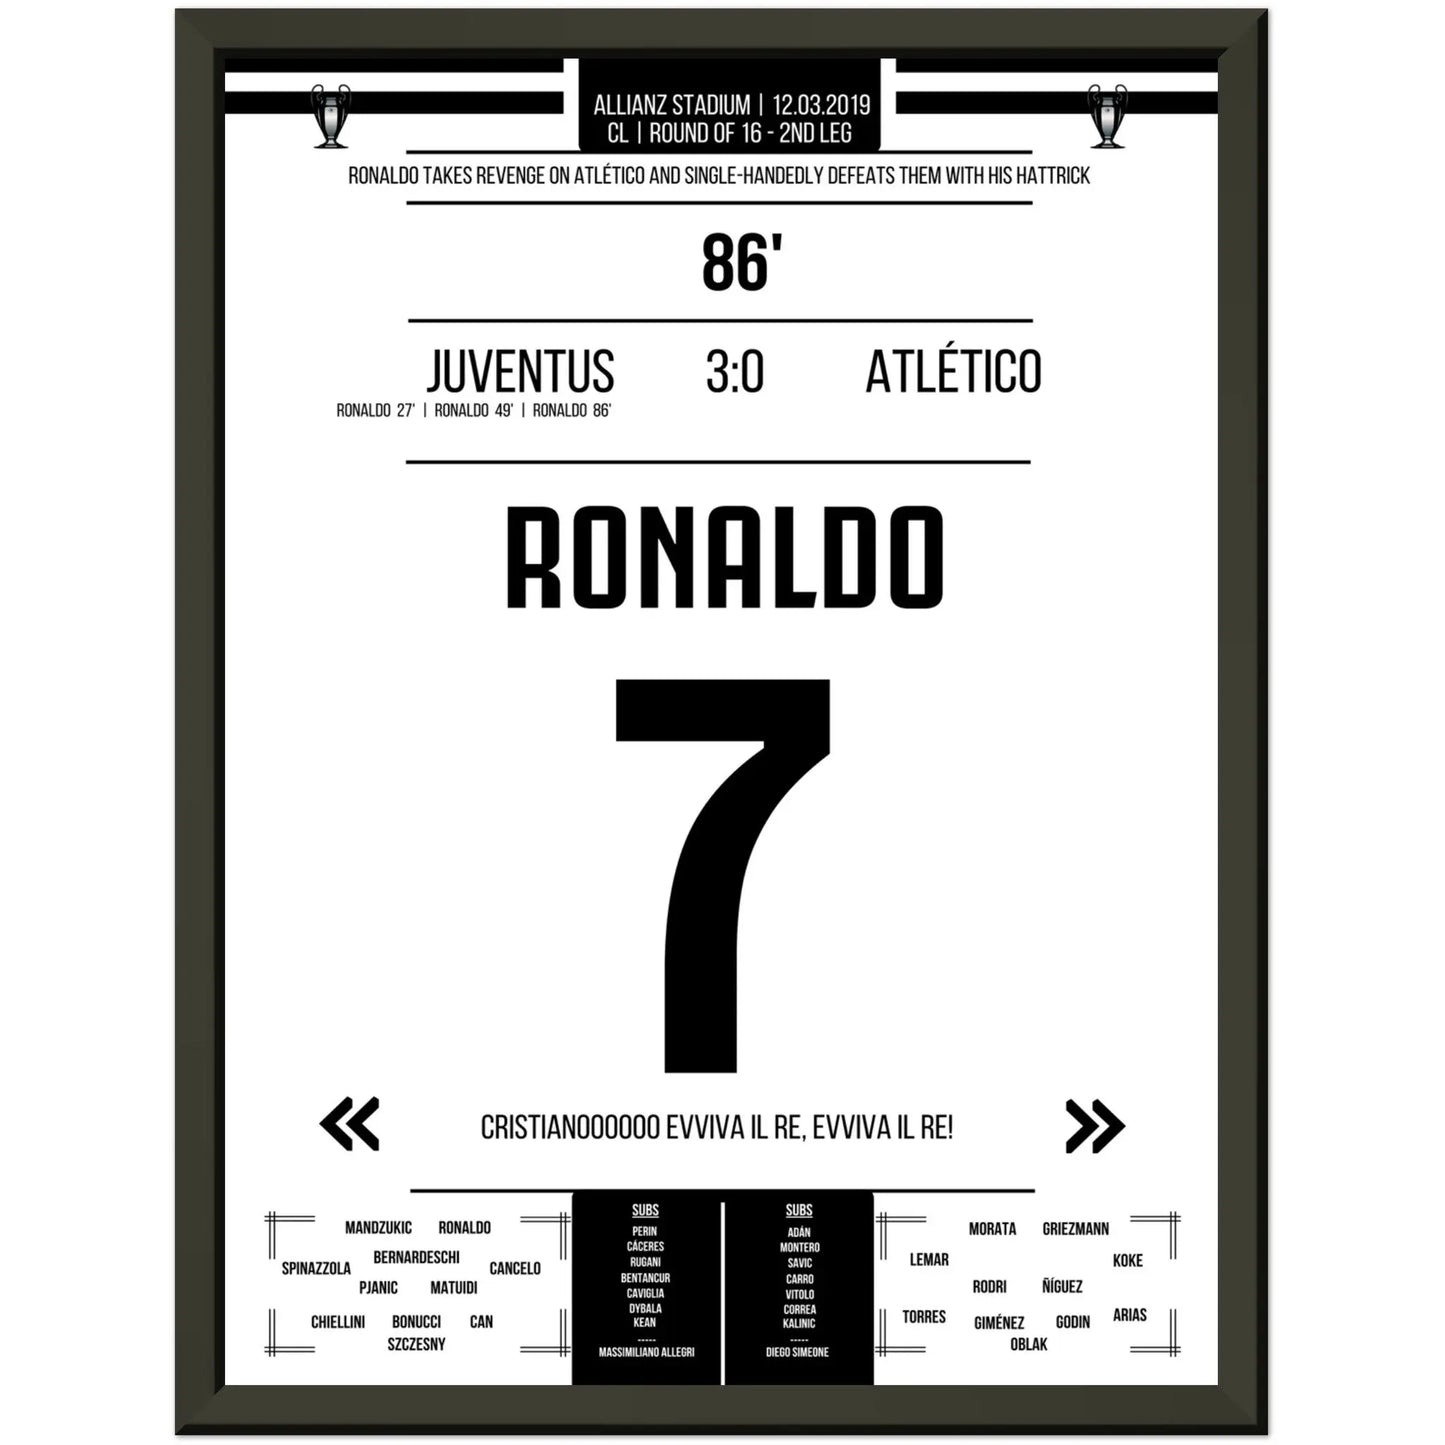 Ronaldo's Rache an Atlético im Champions League Achtelfinal-Rückspiel 2019